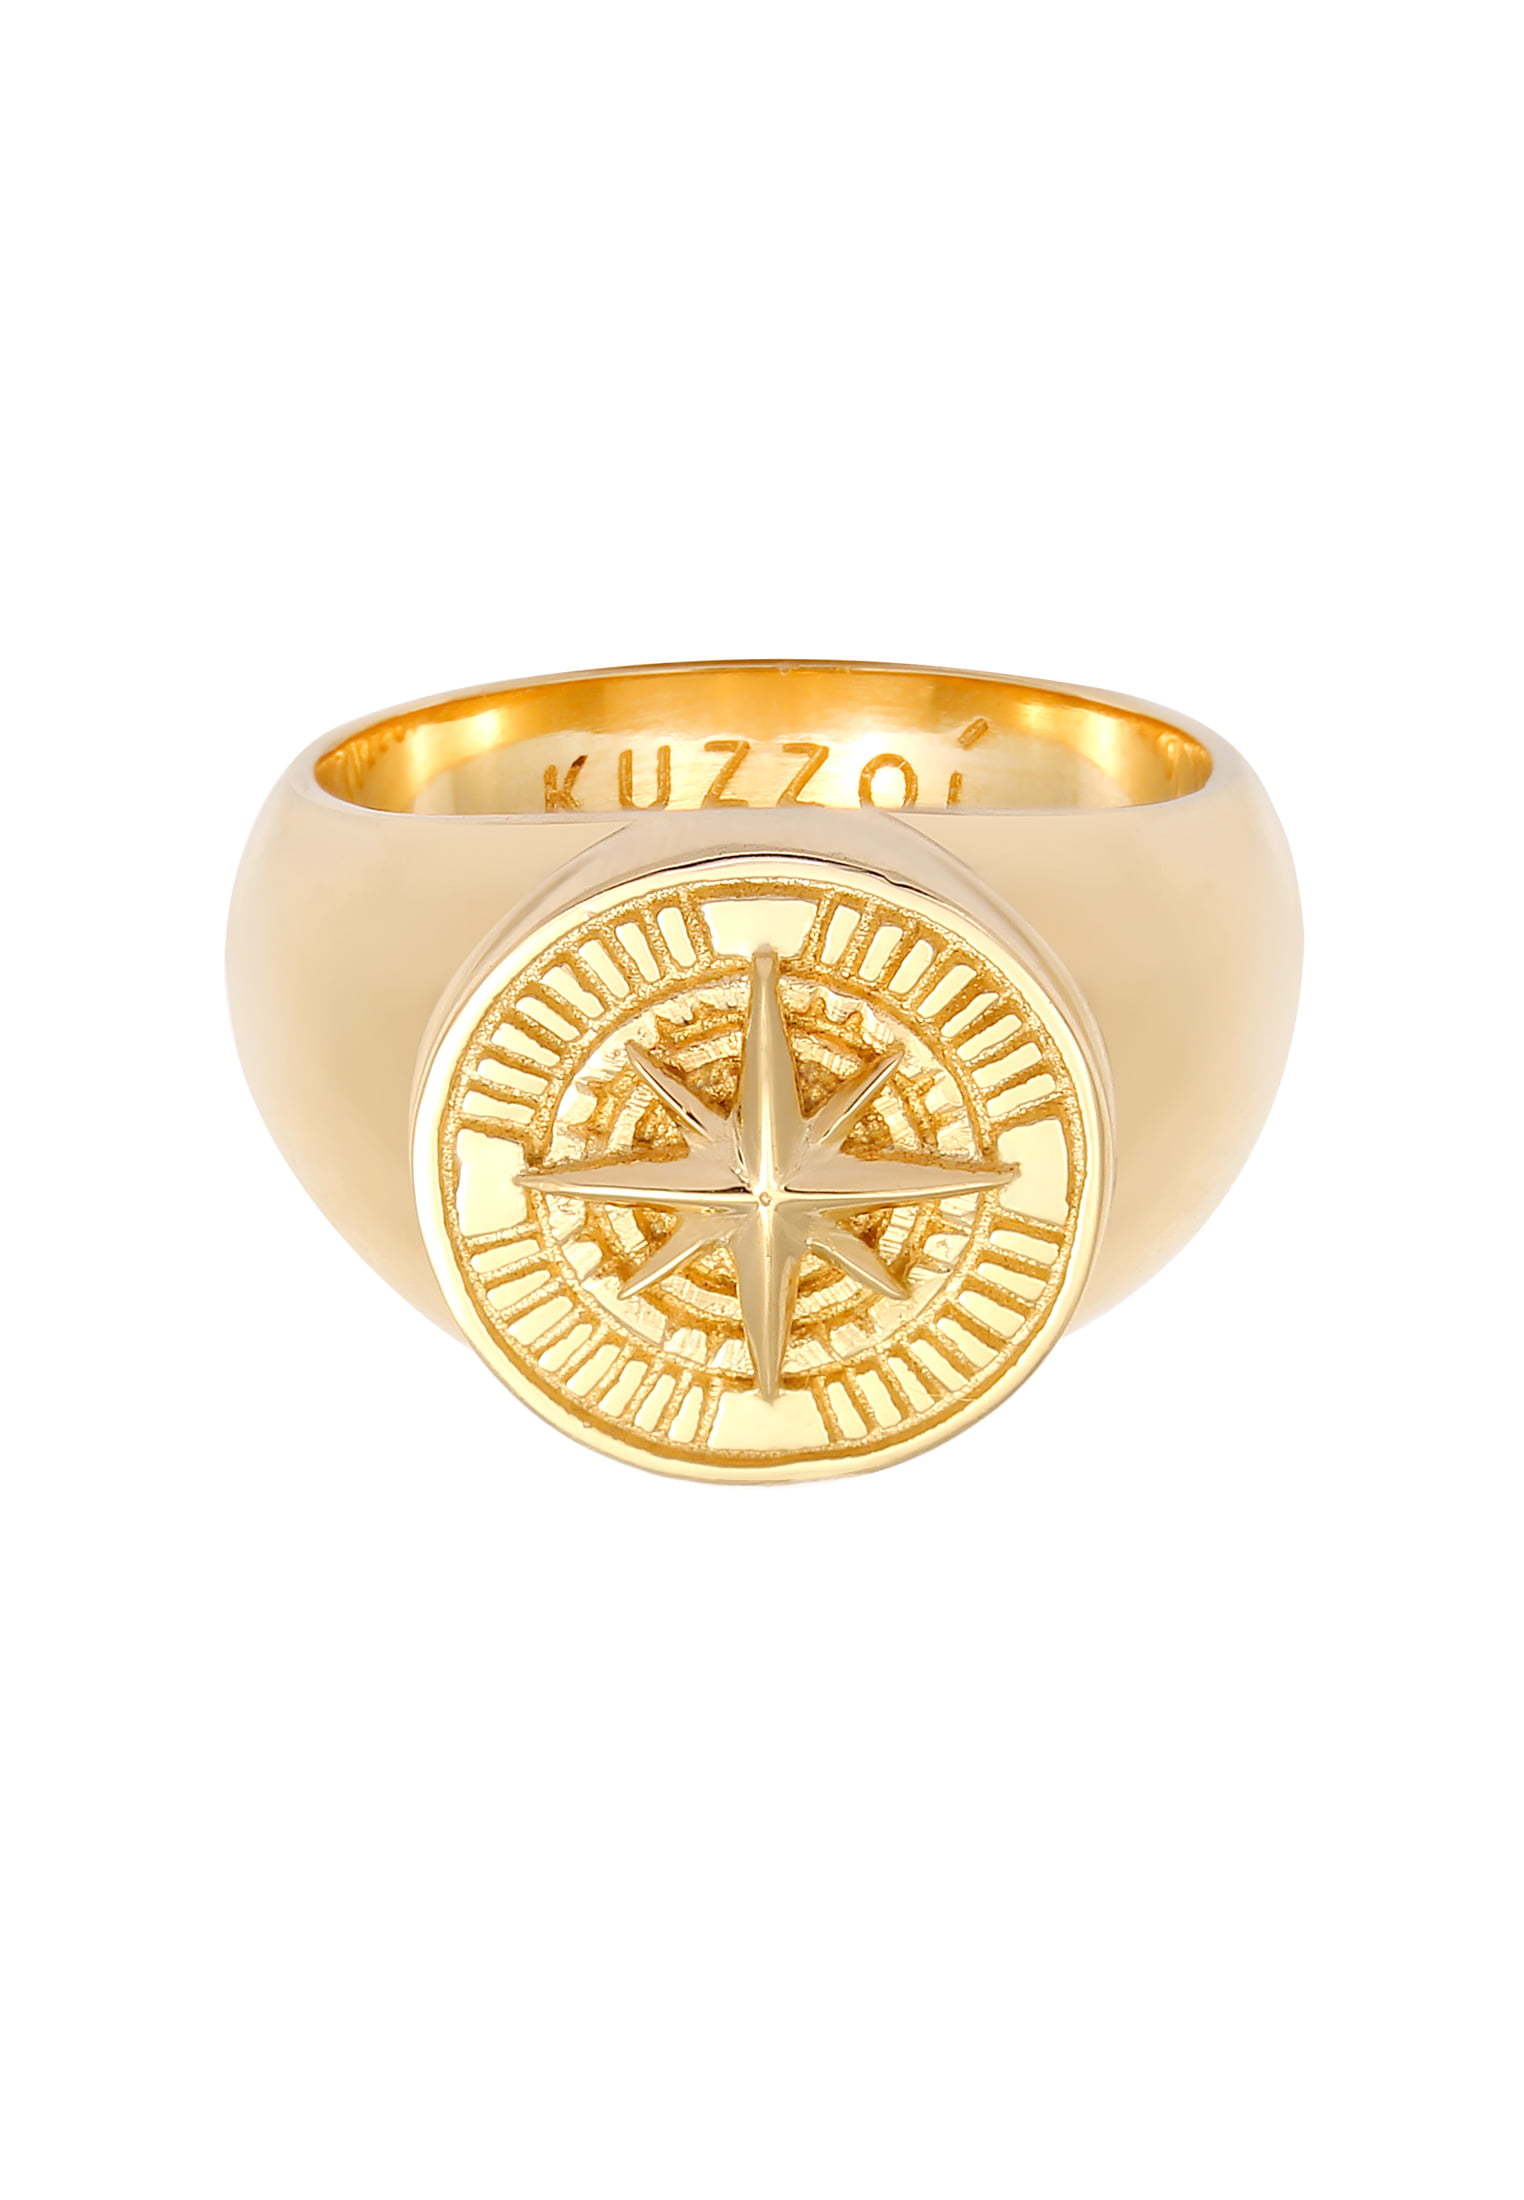 Compass Ring 925 Signet Gold Plated KUZZOI Men\'s Silver 9-11 14K Size